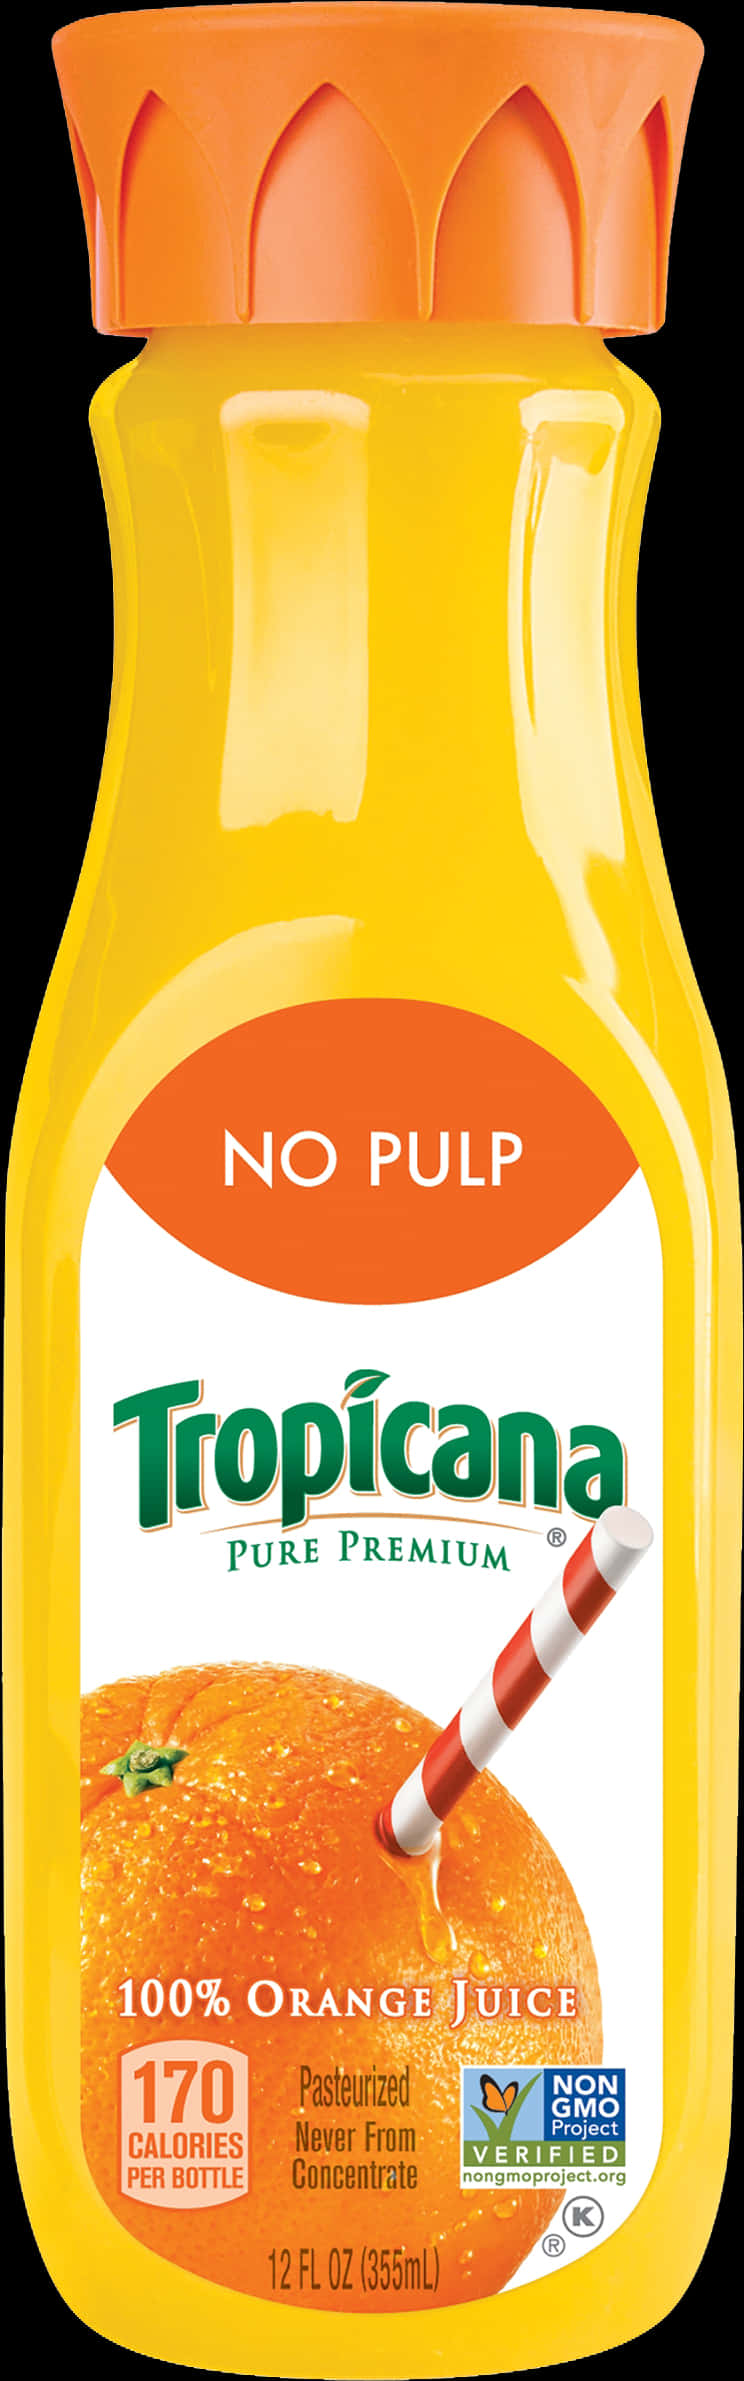 A Bottle Of Orange Juice